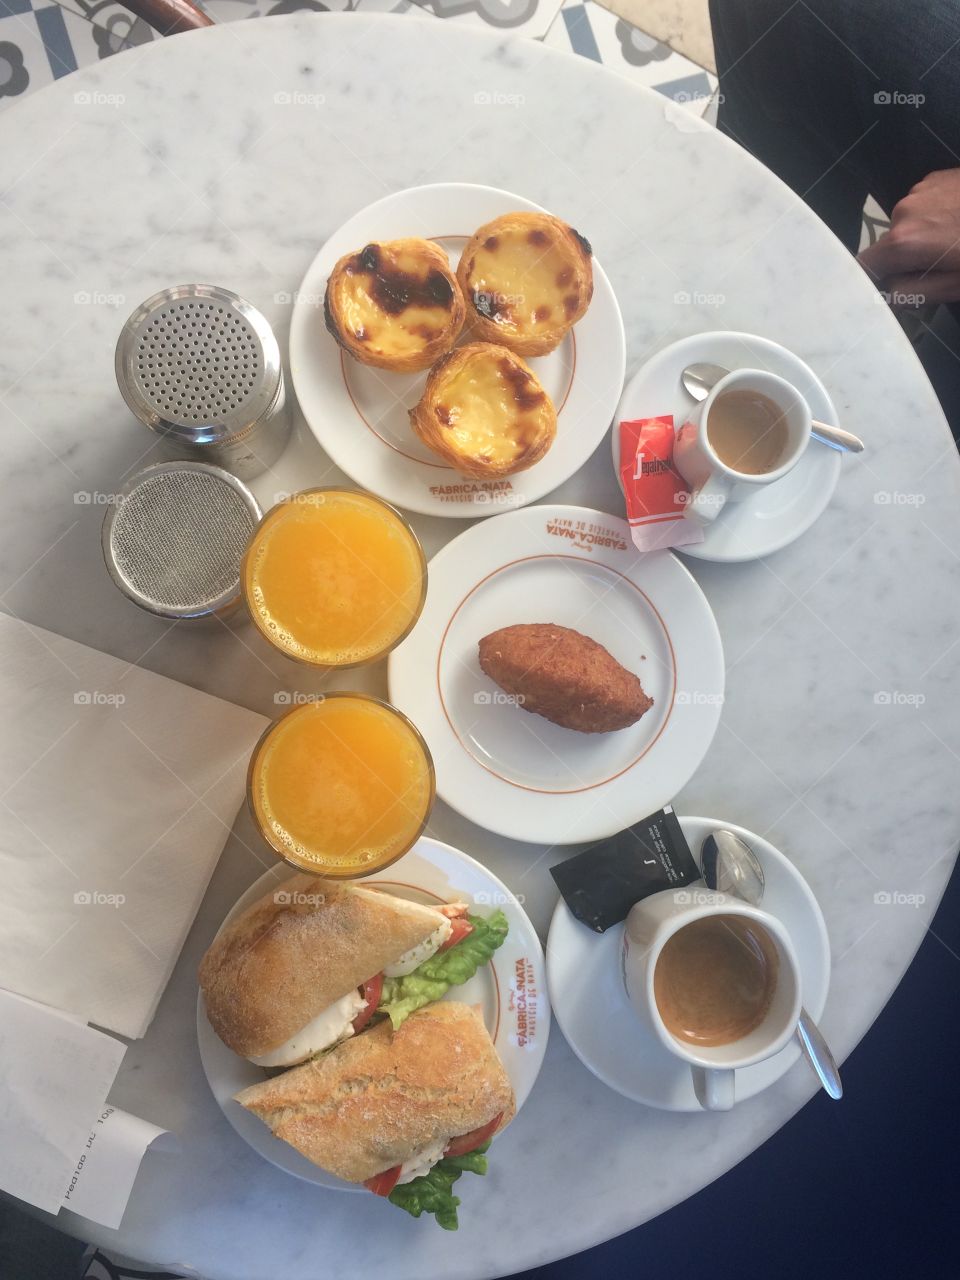 Breakfast. Portugal